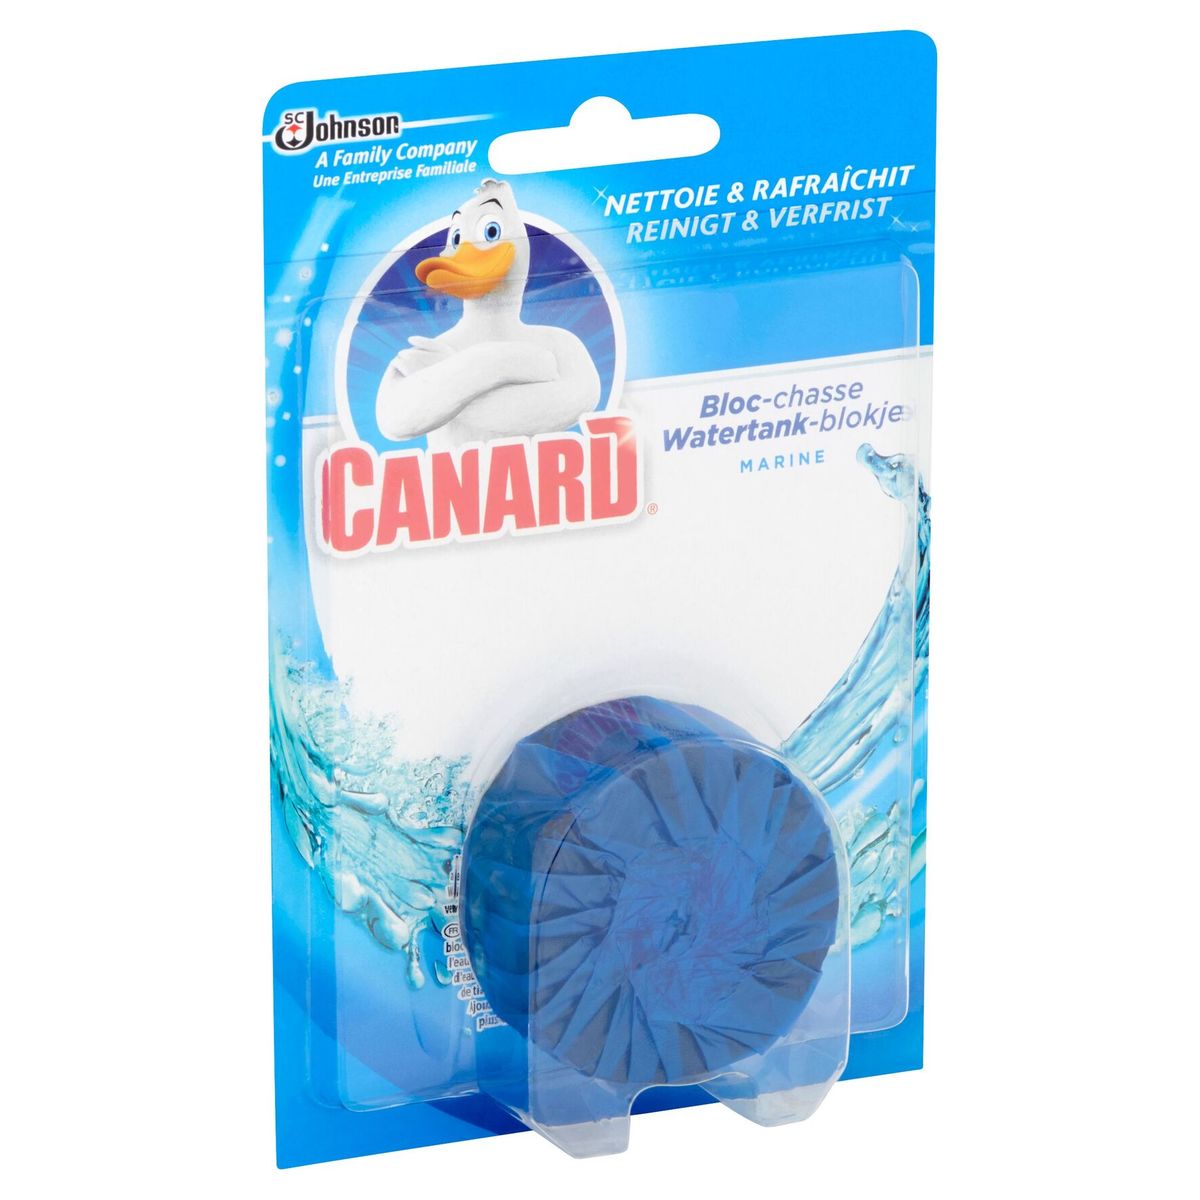 Canard®-Bloc-Chasse Marine -50 g